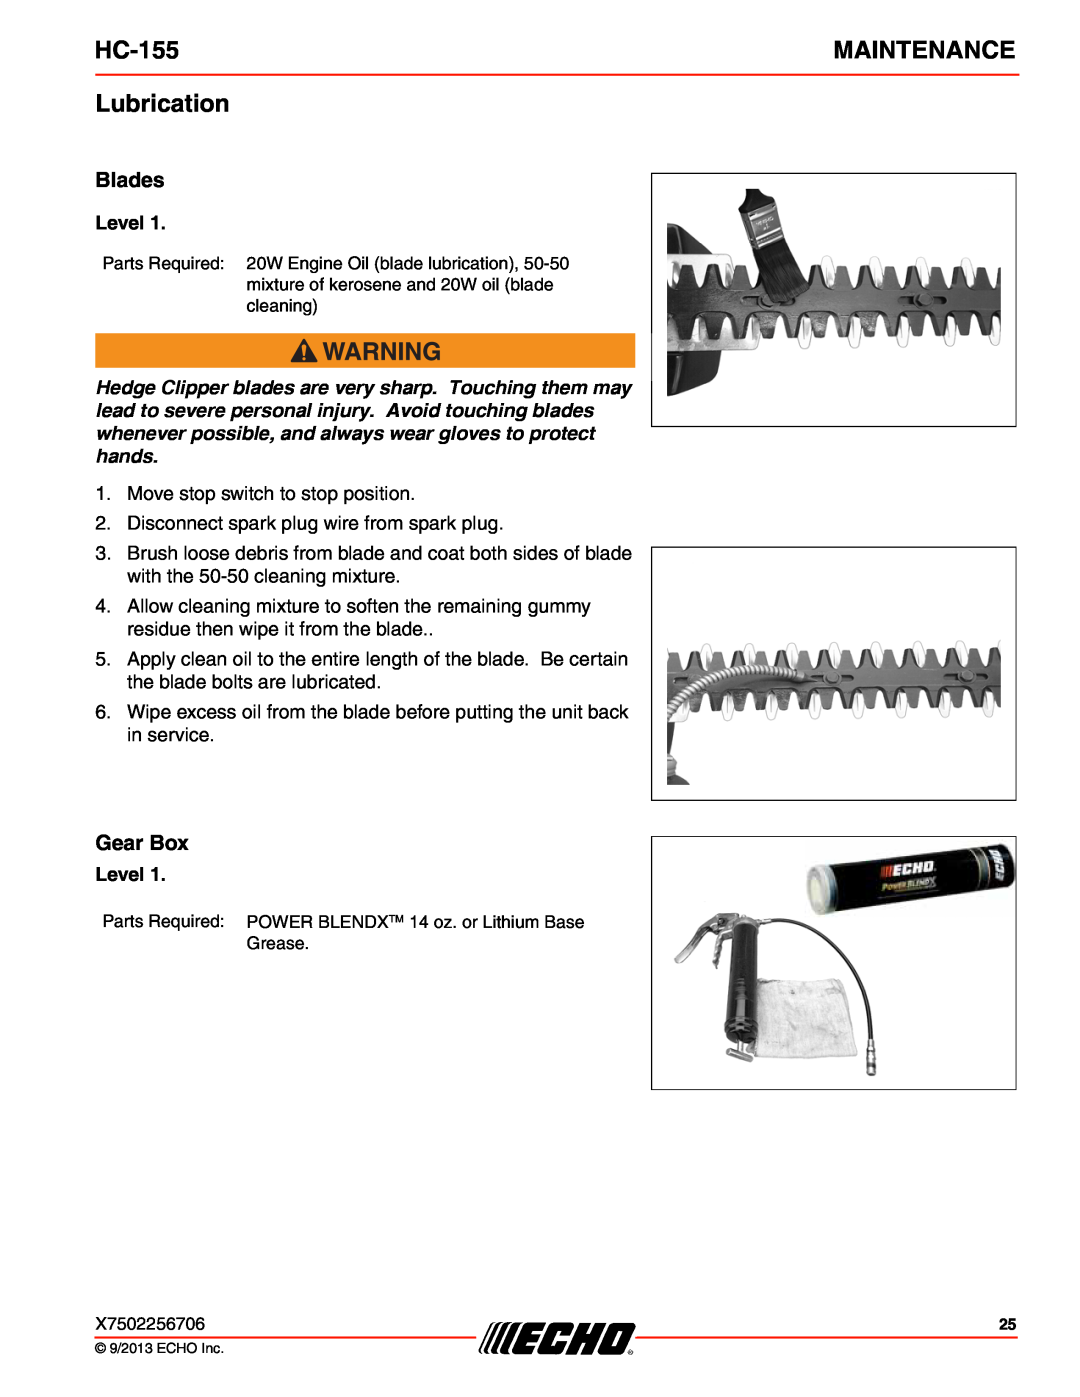 Echo HC-155 specifications Lubrication, Blades, Gear Box, Maintenance, Level 